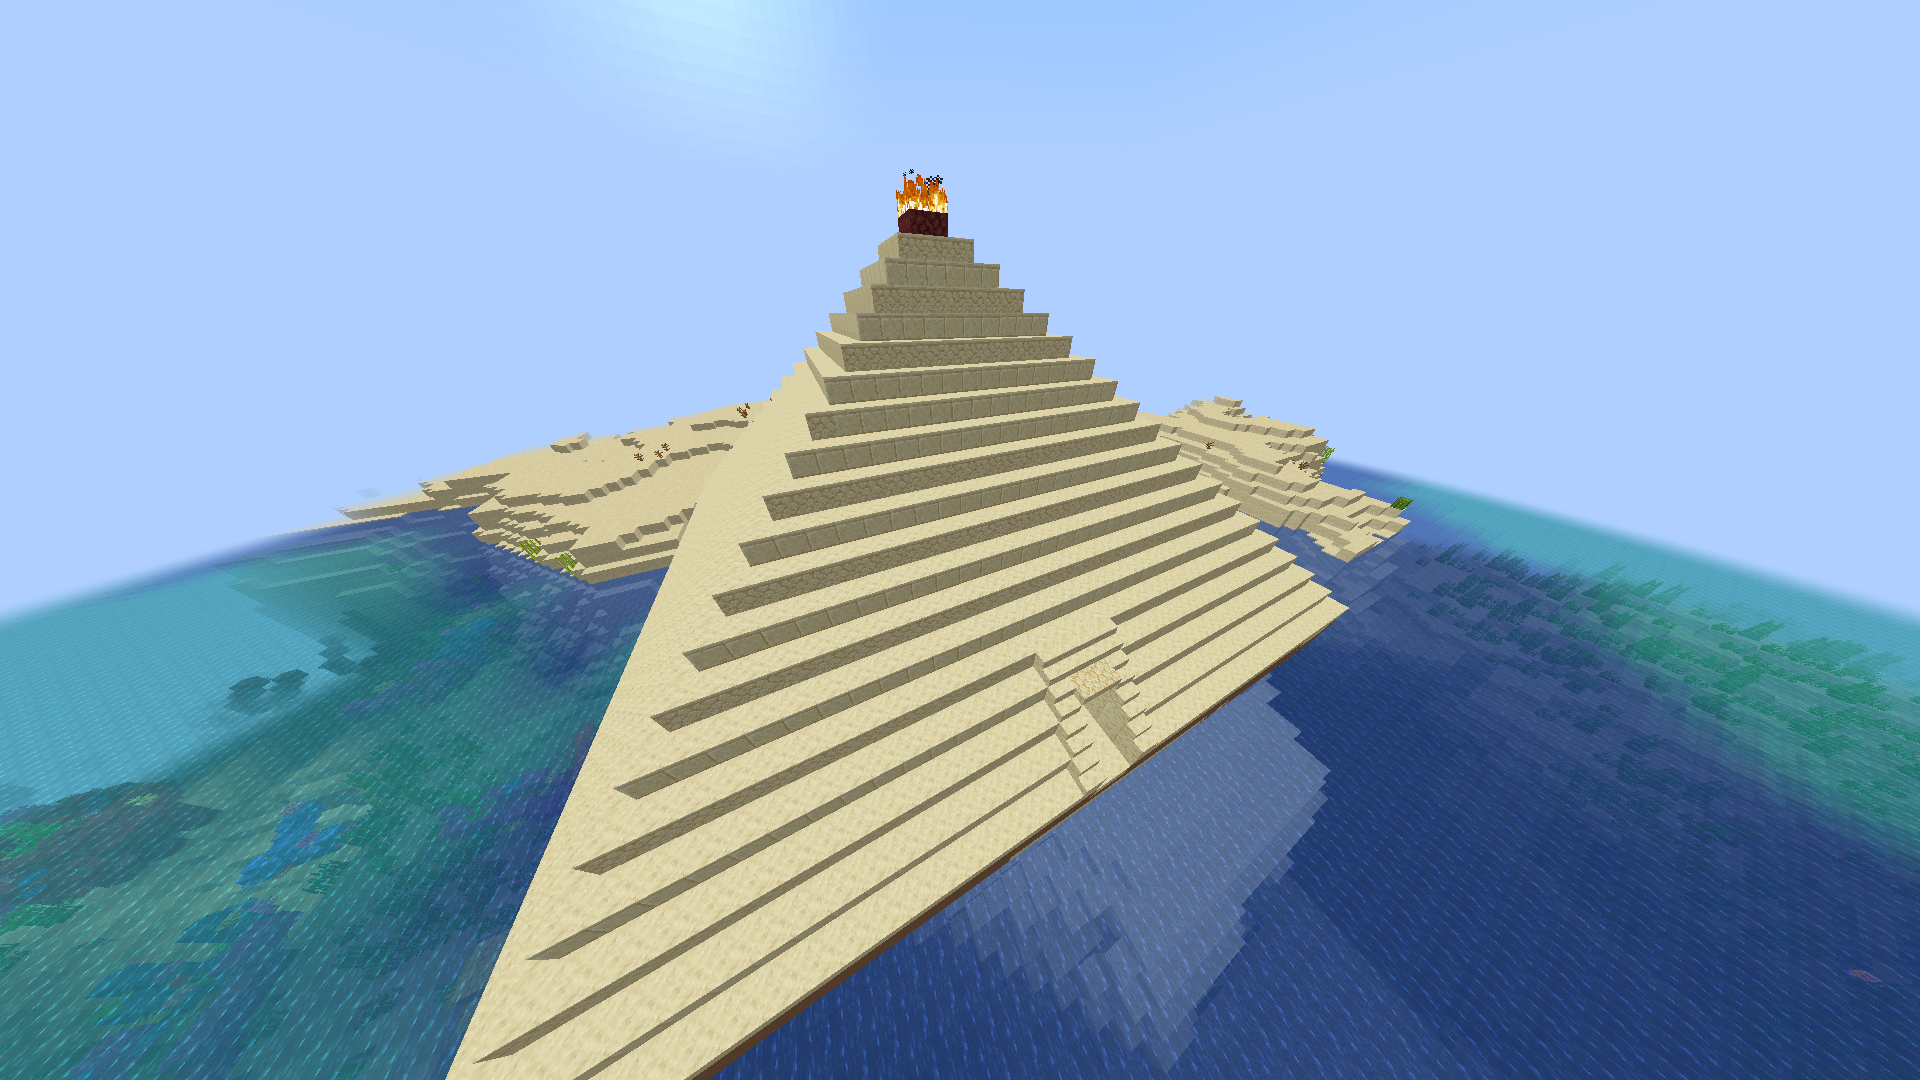 The Sandstone Pyramid